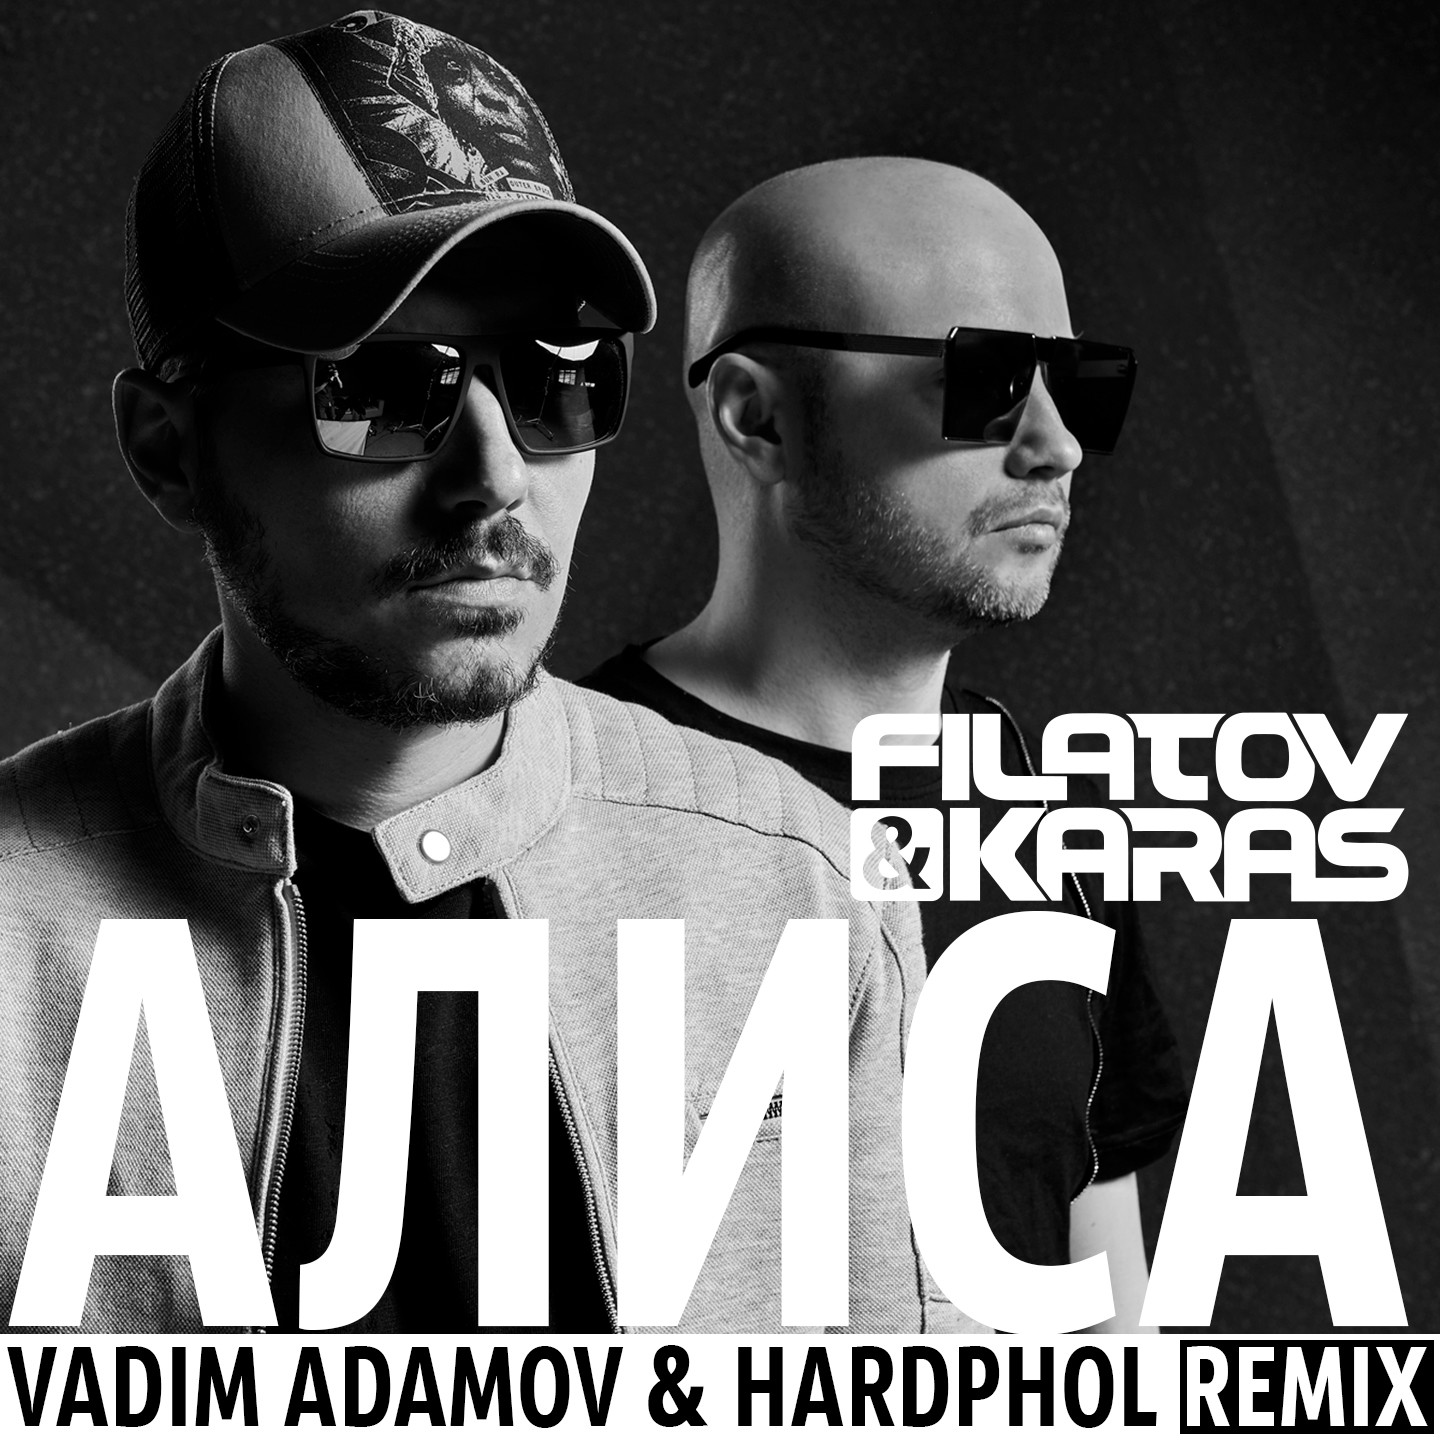 Filatov And Karas Алиса Vadim Adamov And Hardphol Remix – Vadim Adamov